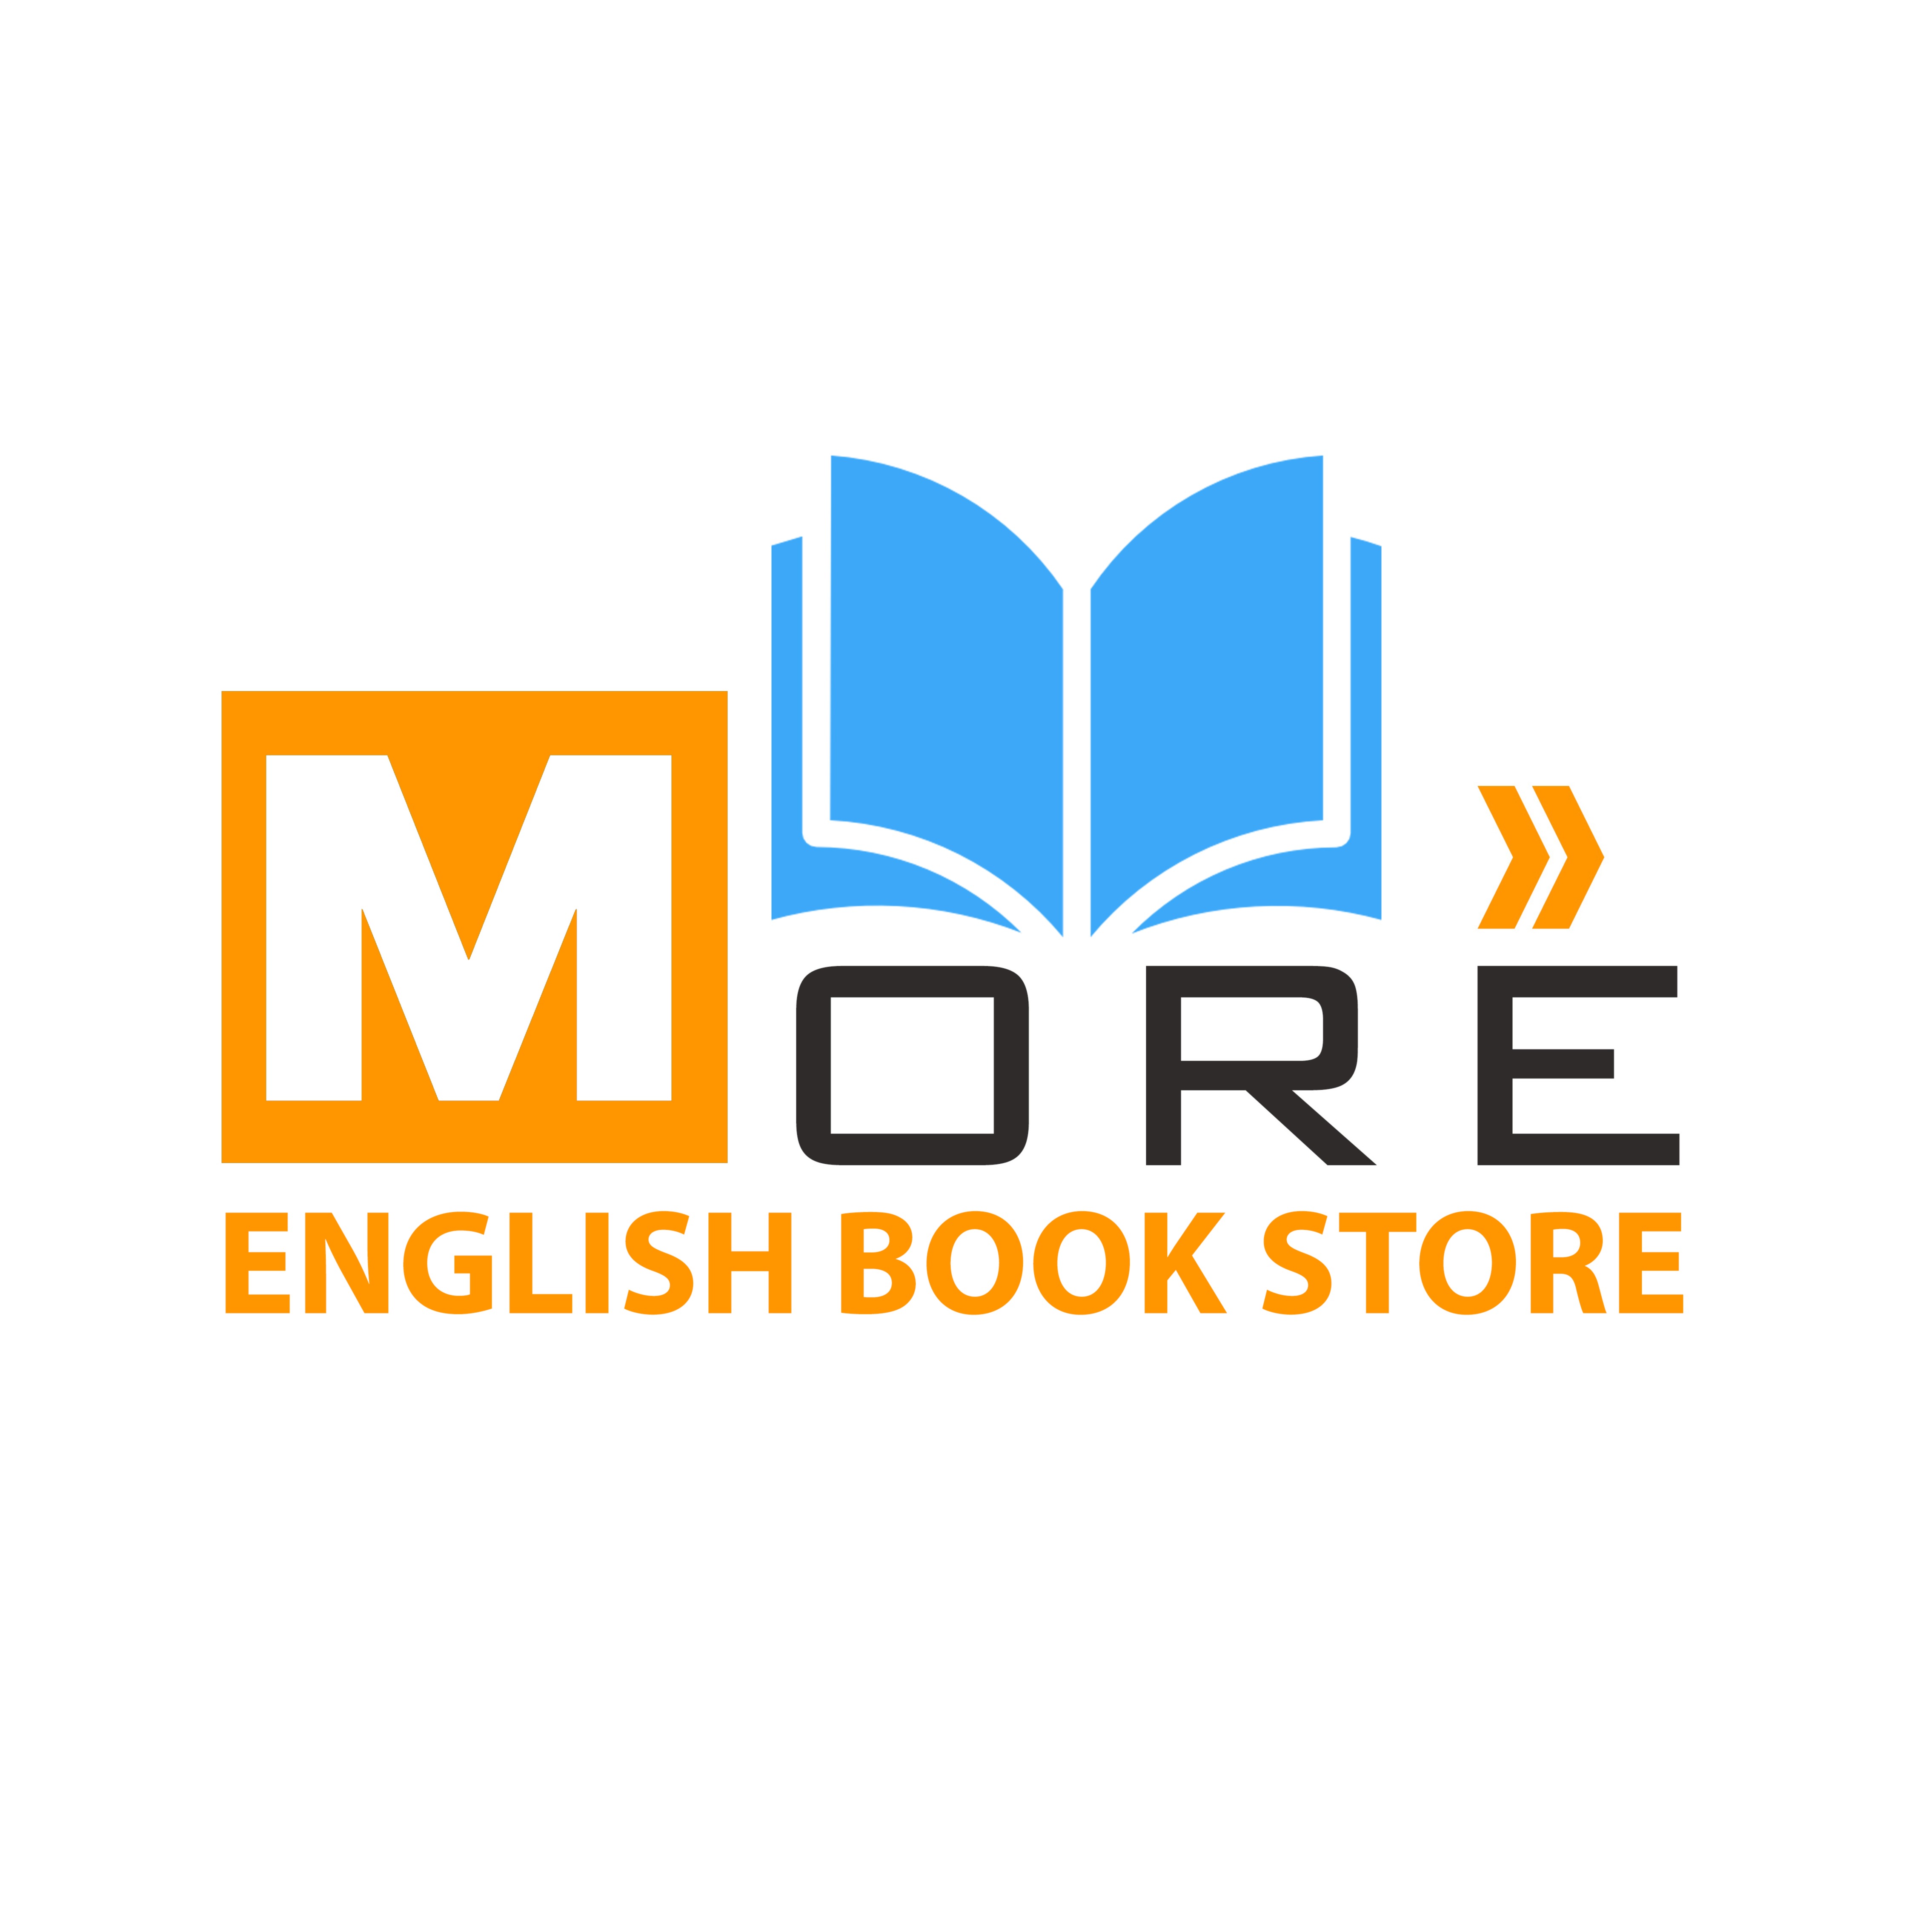 English Books Store